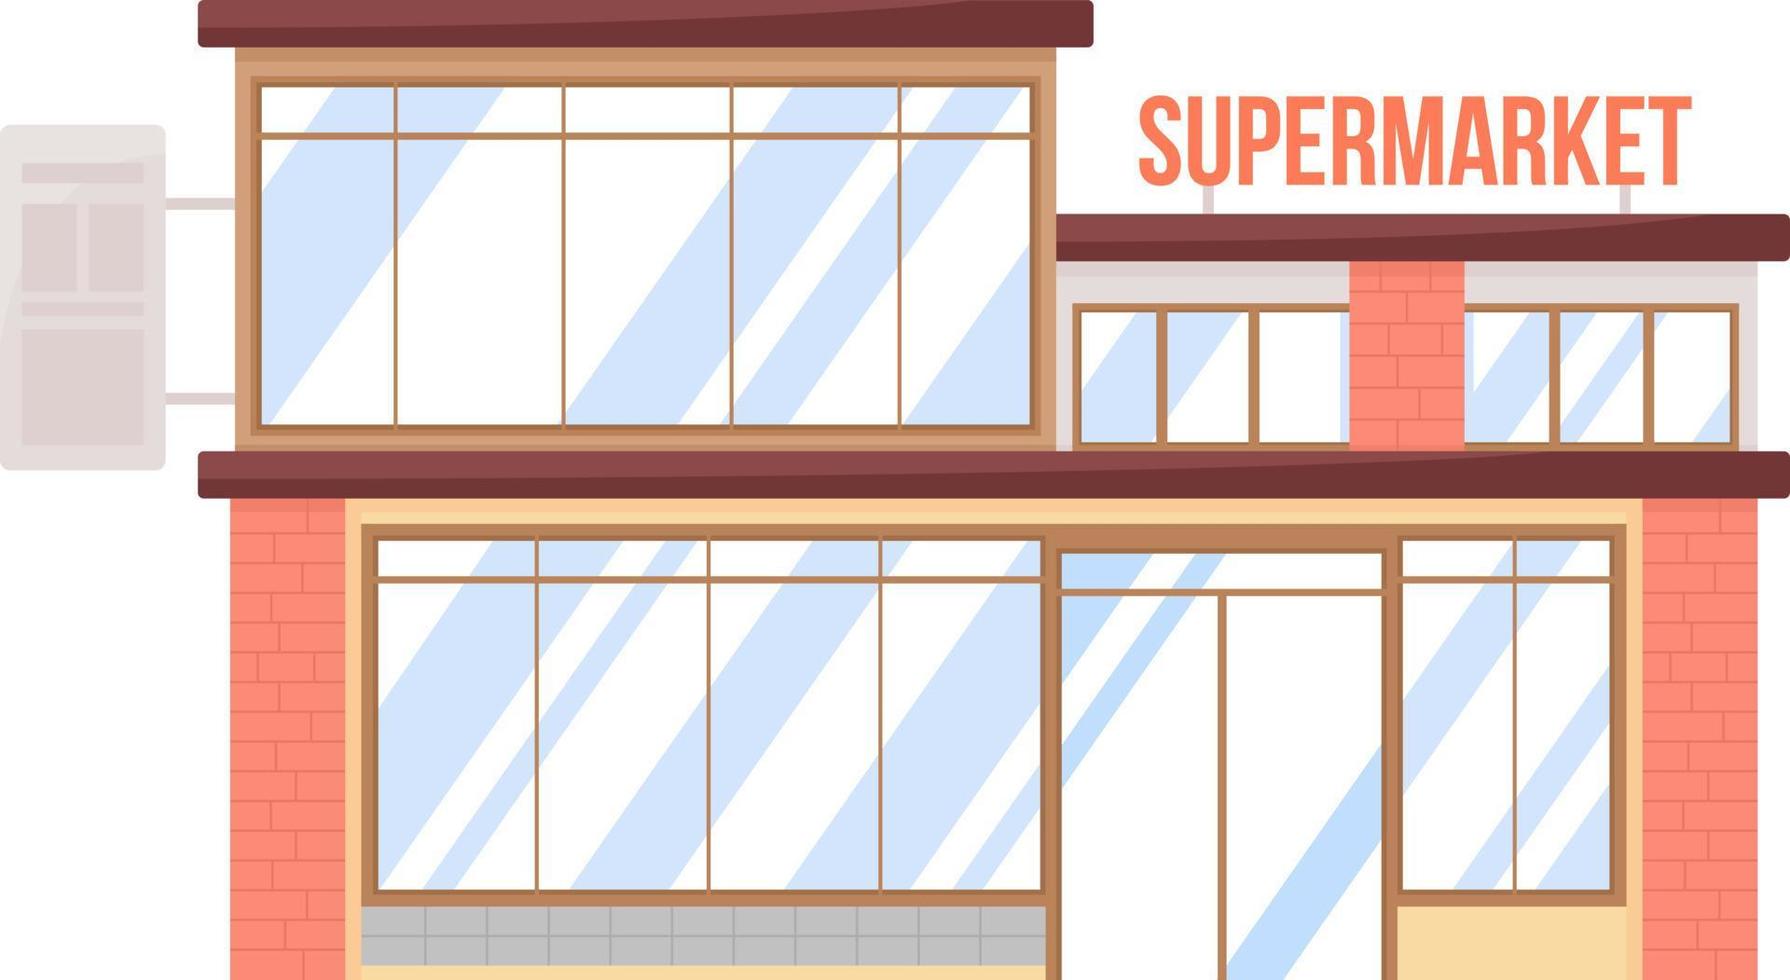 Supermarket semi flat color vector object